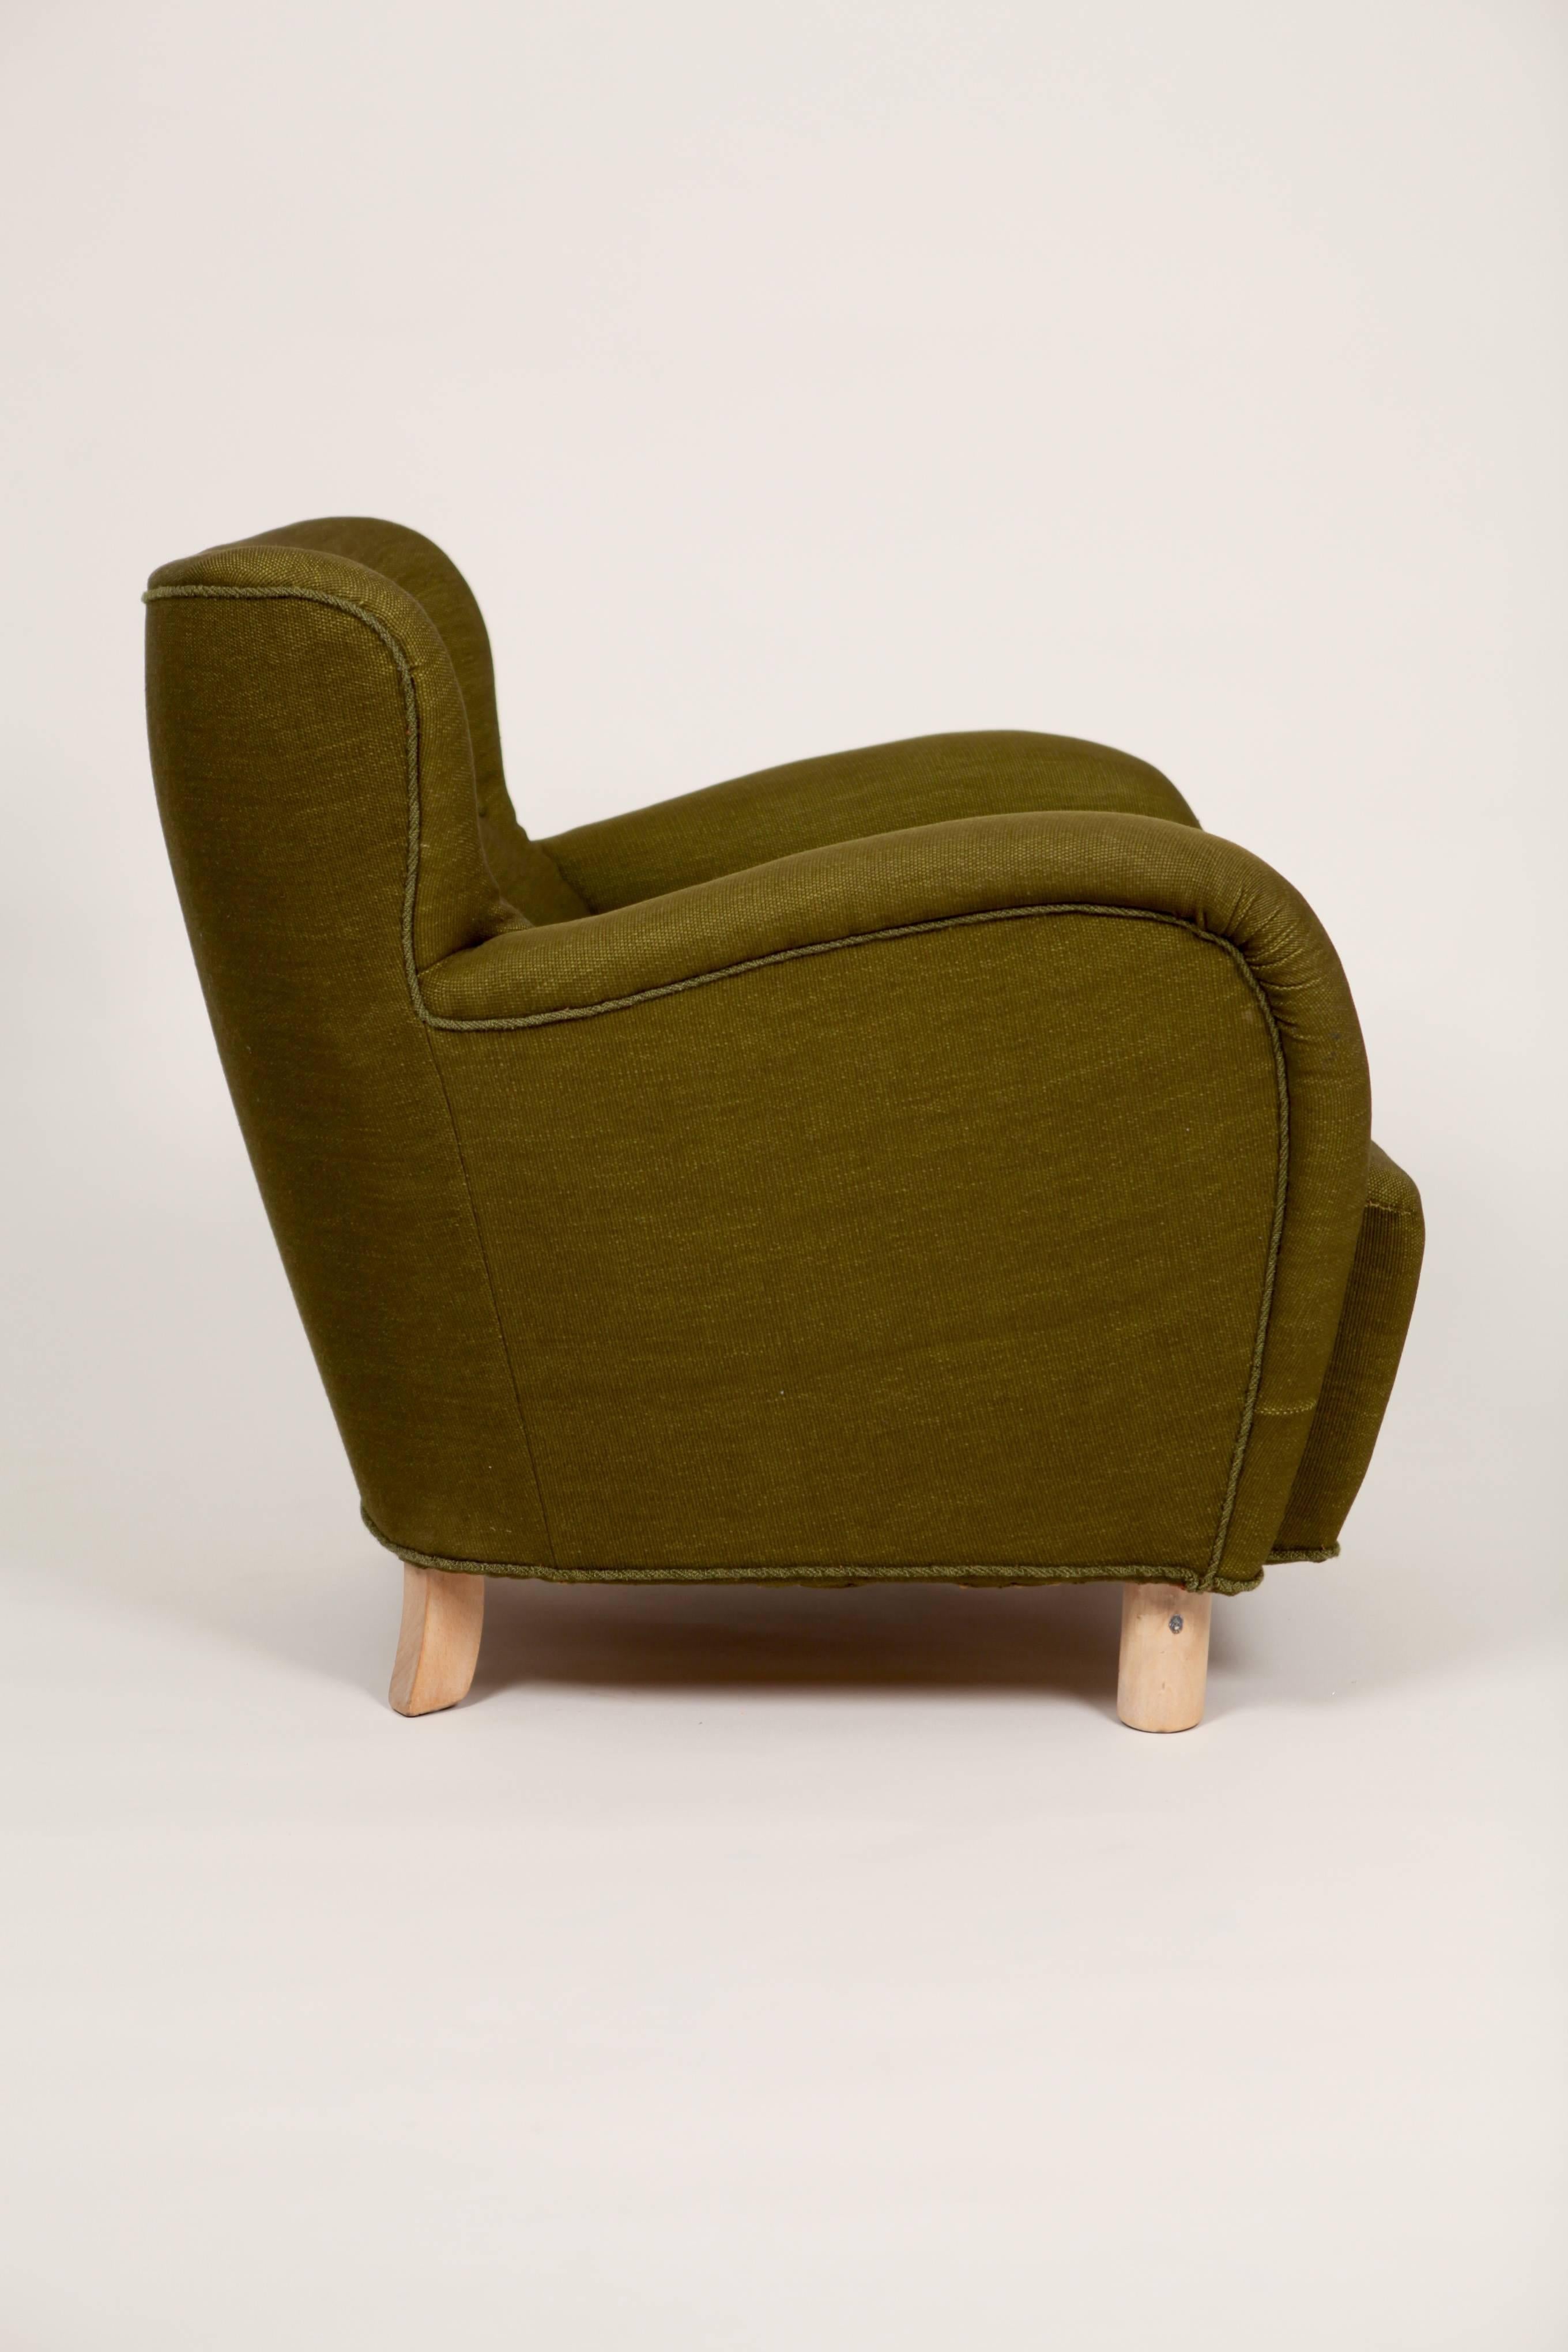 Danish Flemming Lassen Attributed Club Chair, 1930-1940